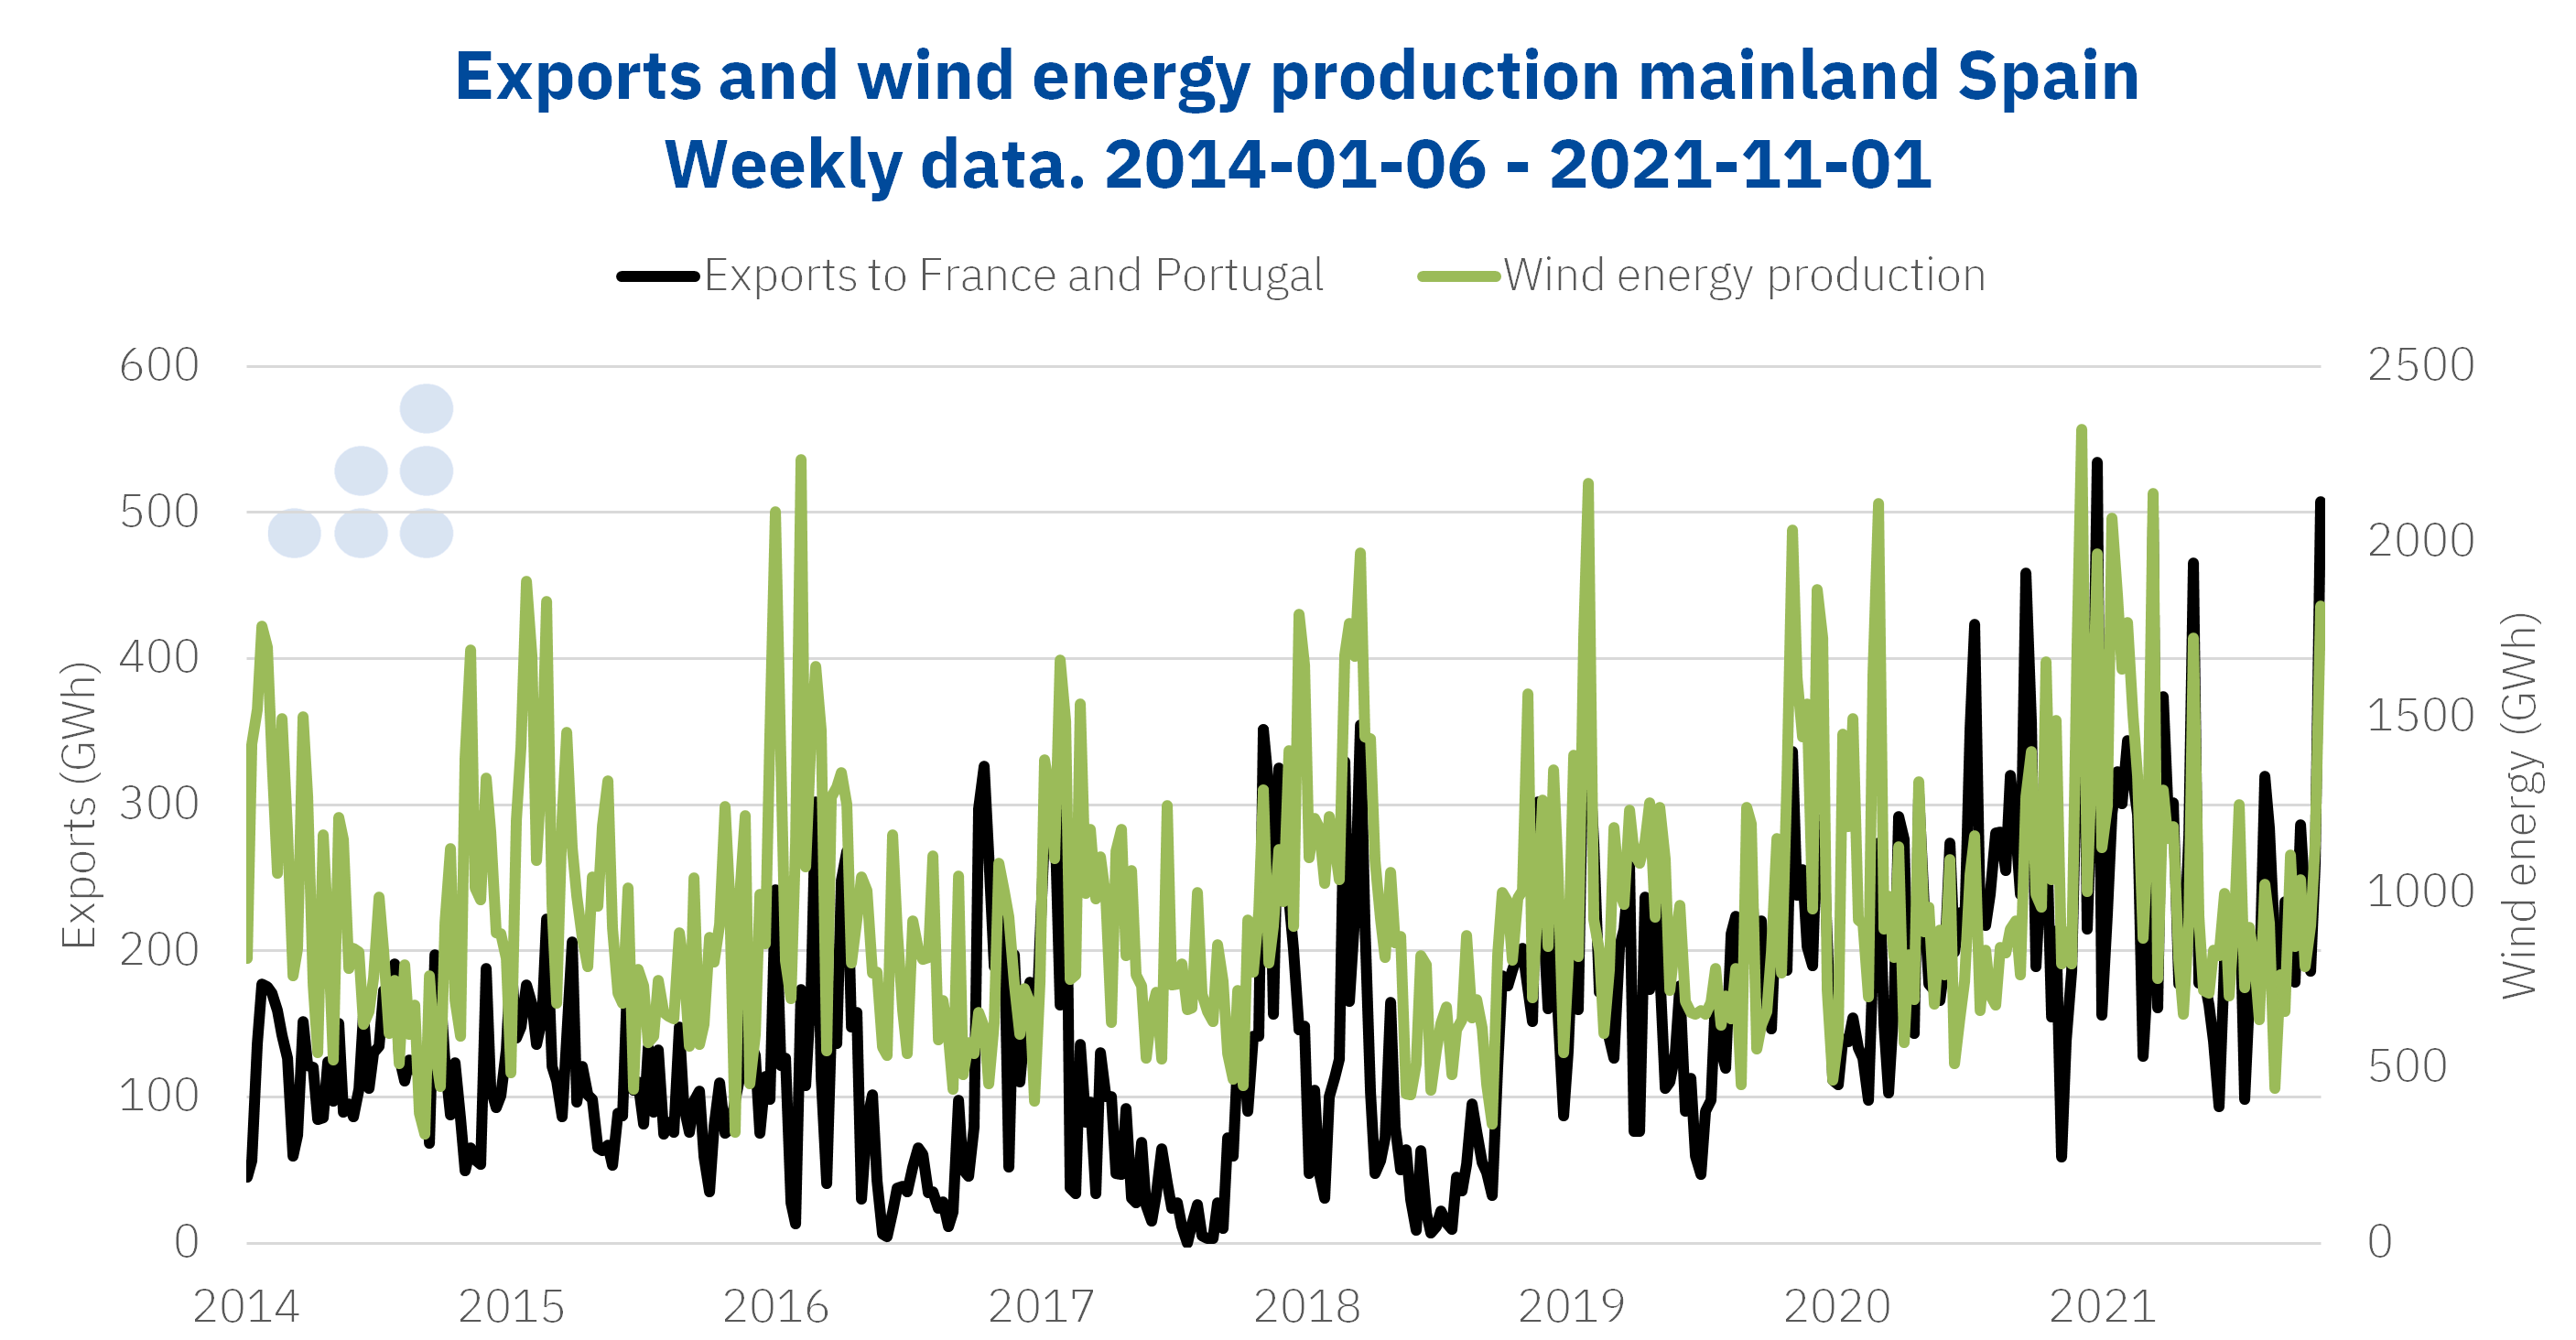 AleaSoft - Exports wind energy production mainland Spain